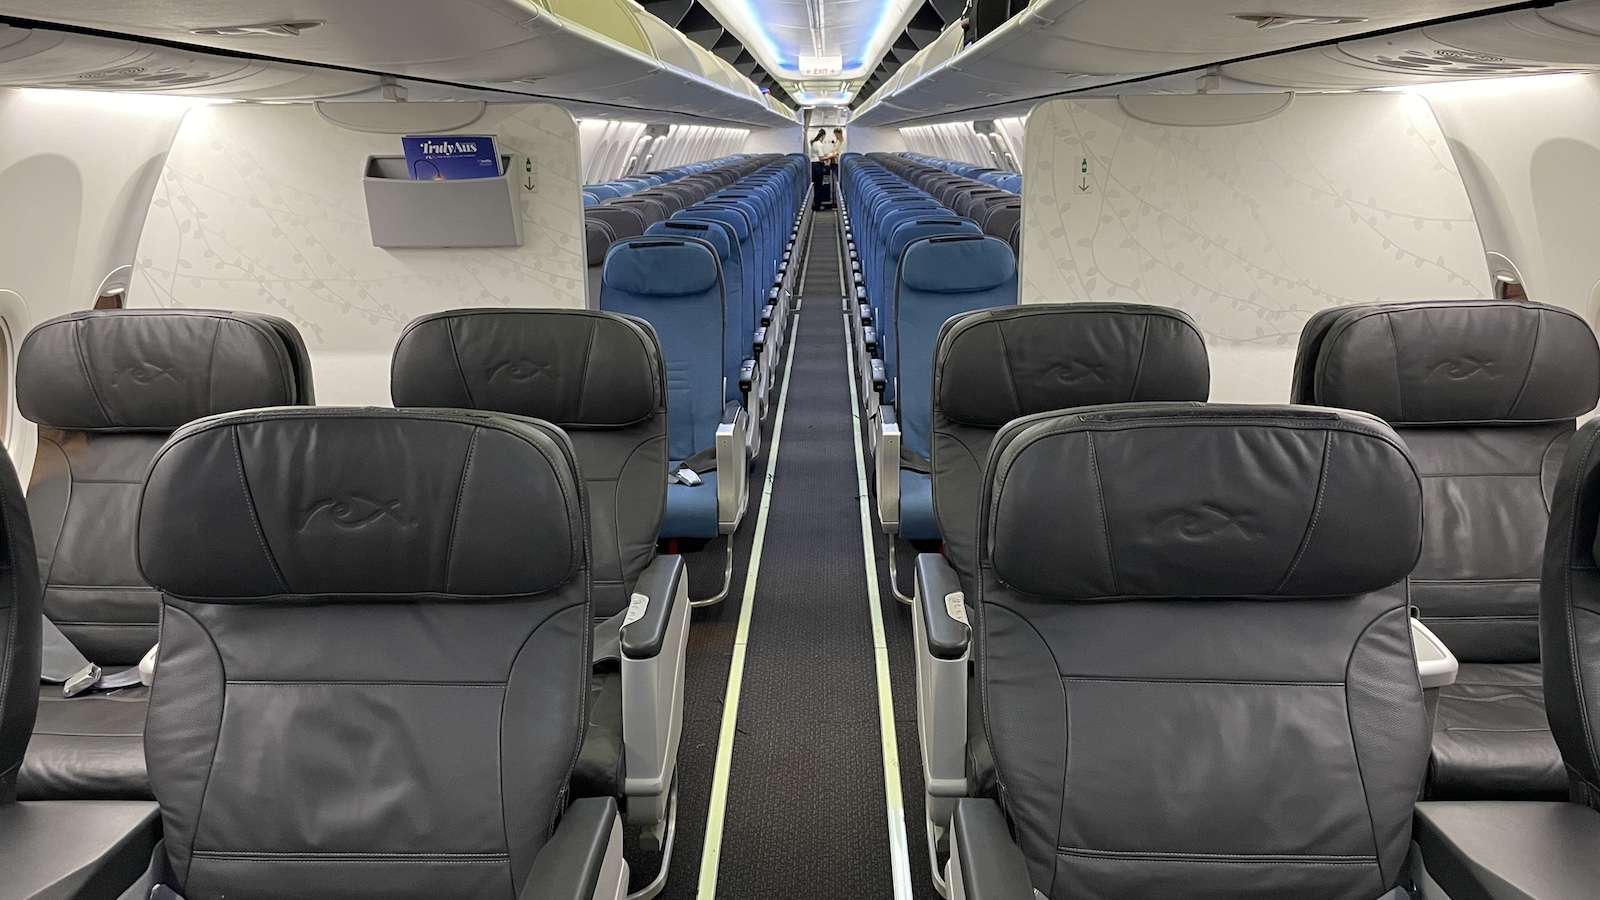 Rex Airlines Brisbane to Sydney 737 Business Economy Cabins Point Hacks